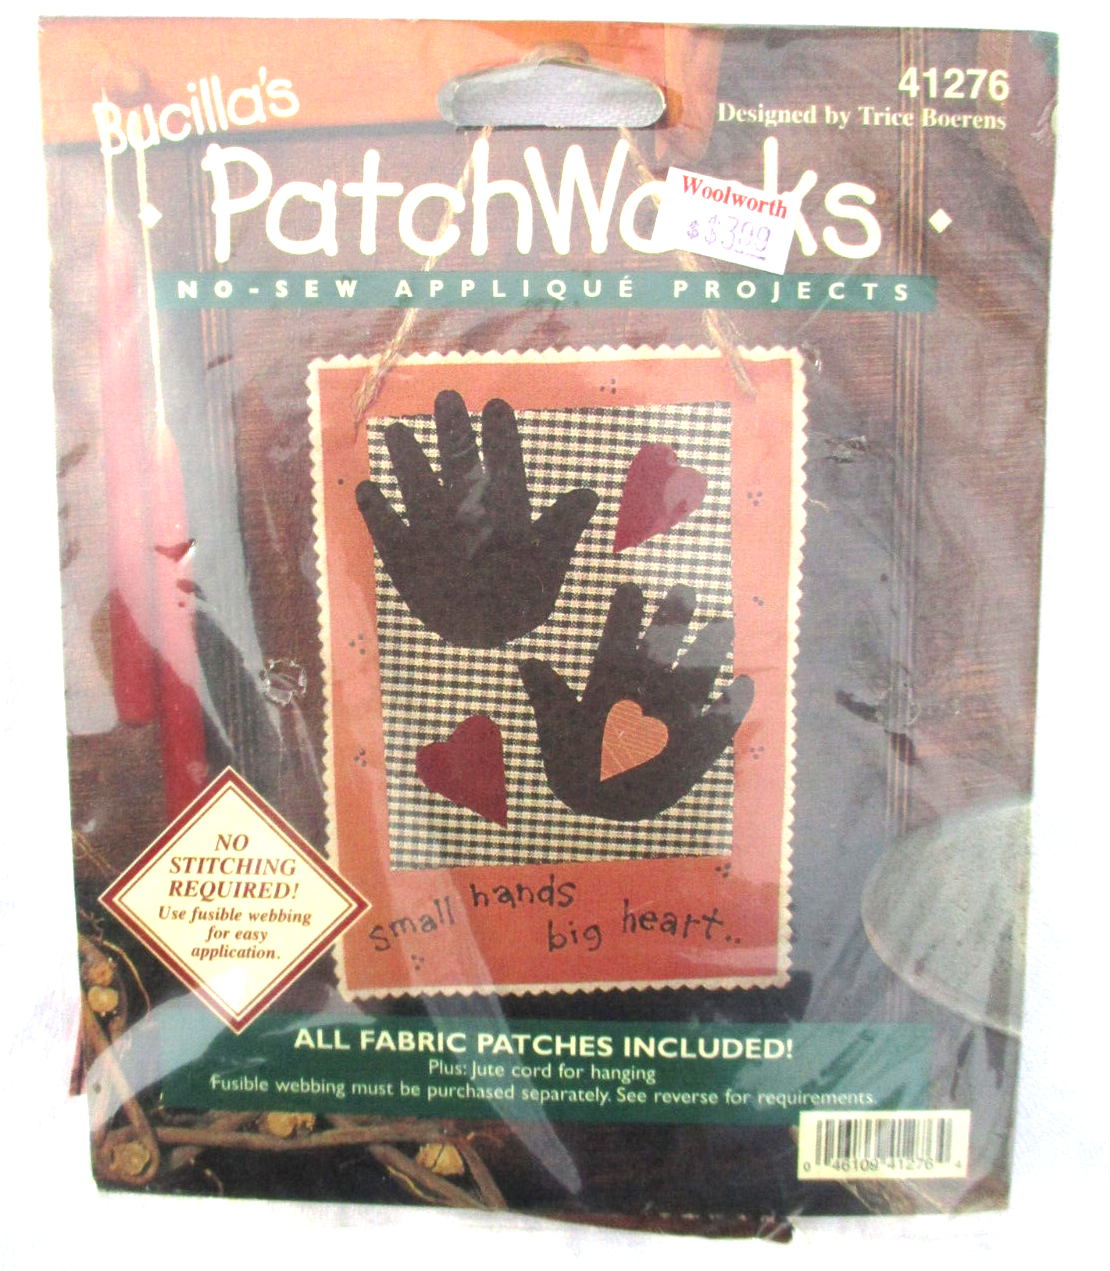 Bucilla PatchWorks No Sew Applique Kit SMALL HANDS BIG HEART 5x7 NEW 1990s - $9.49